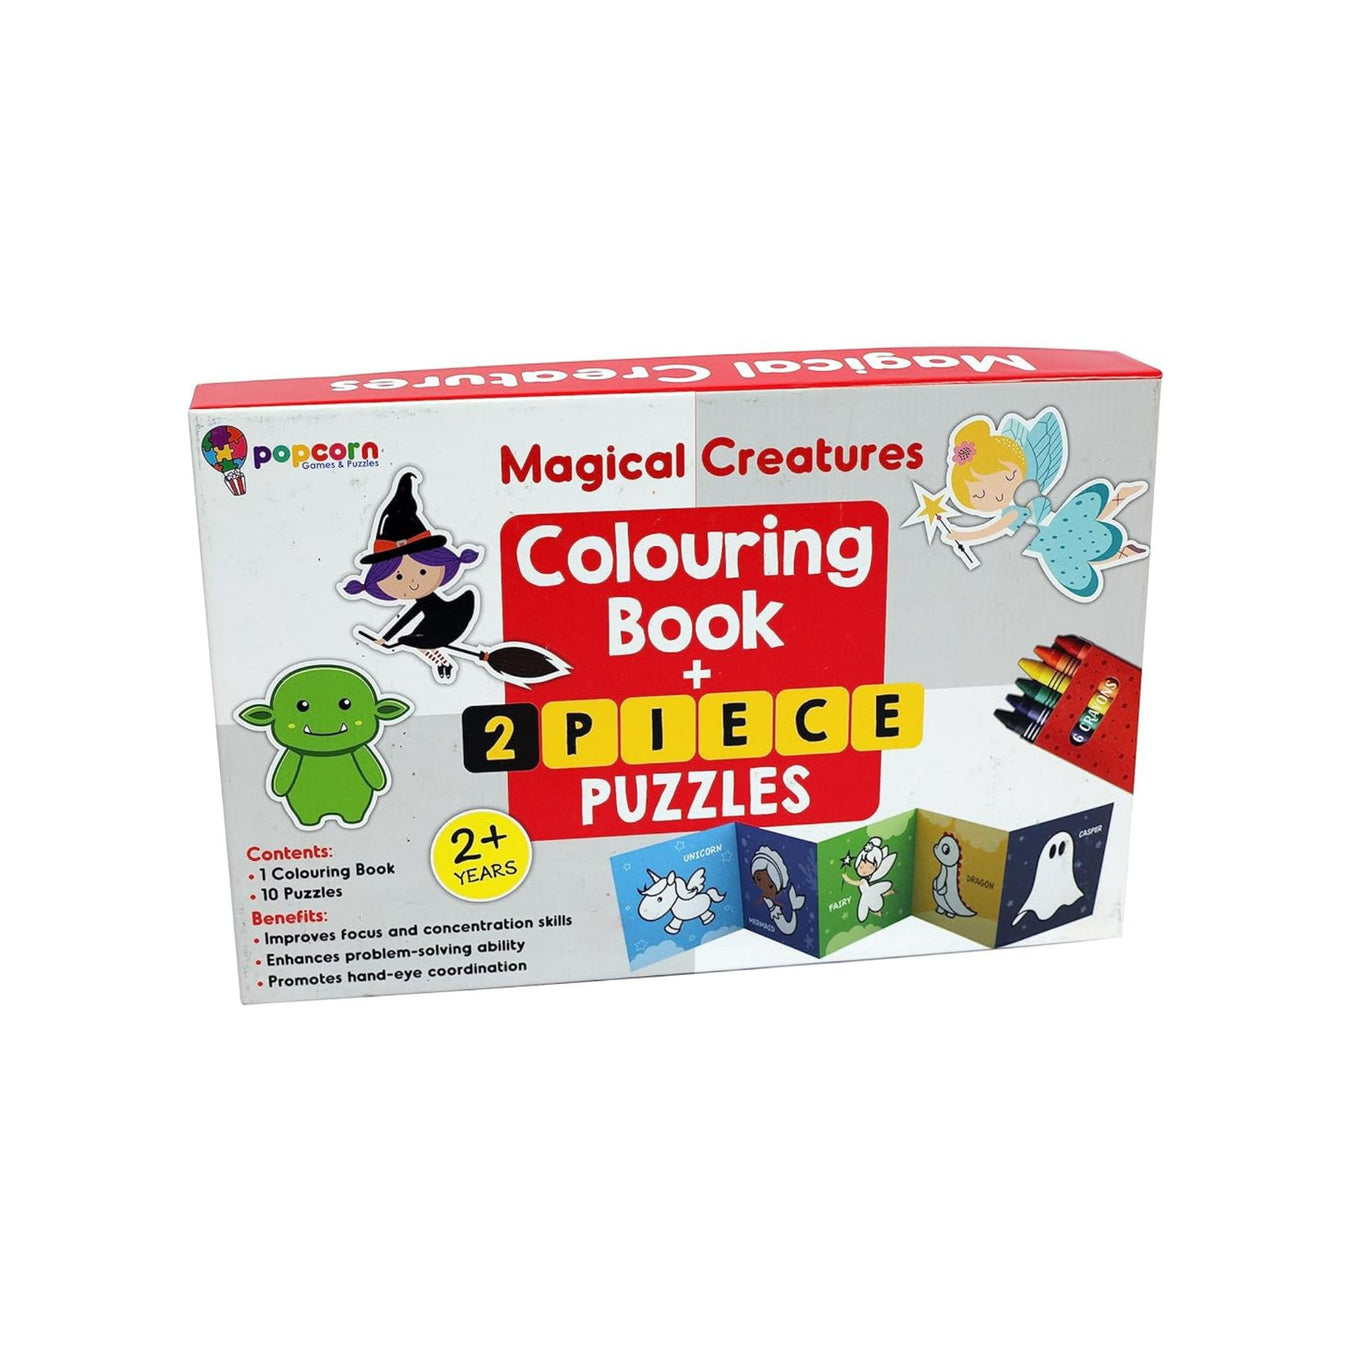 2 Piece puzzle + Colouring Book